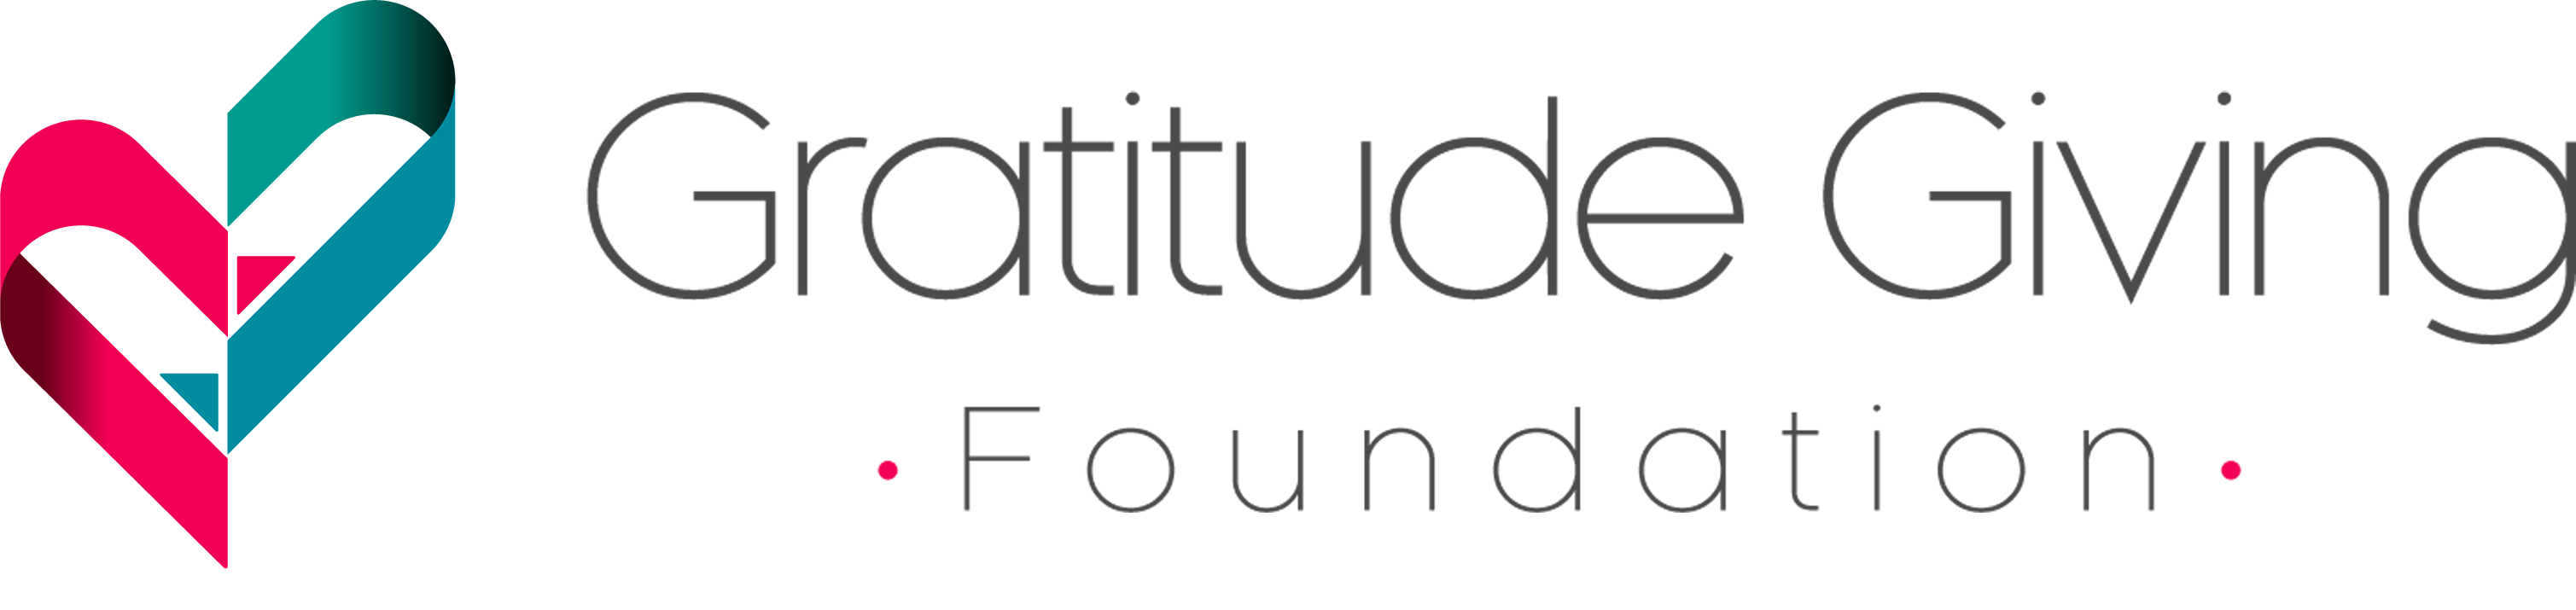 Gratitude Giving Foundation